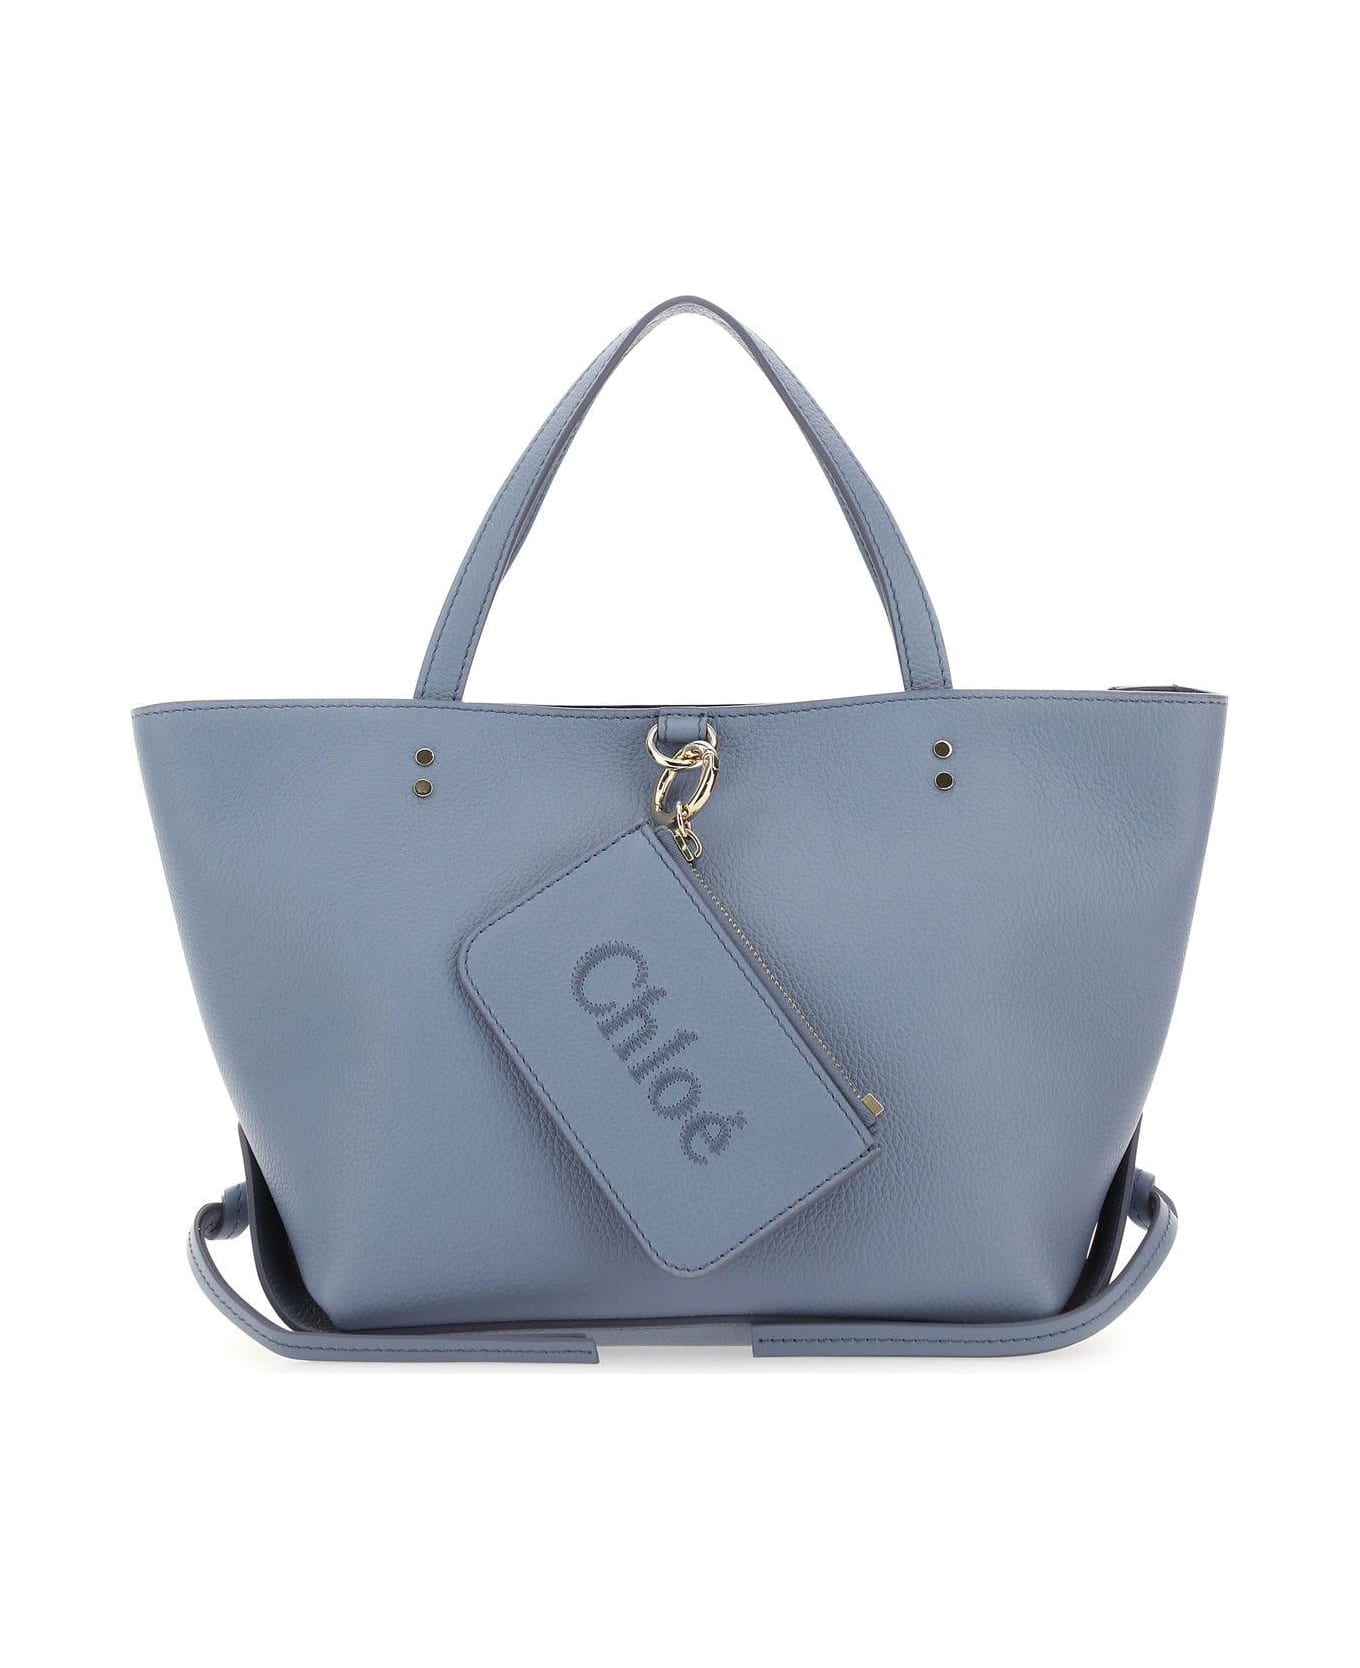 Chloé Powder Blue Leather Small Chloè Sense Handbag - Shady cobalt